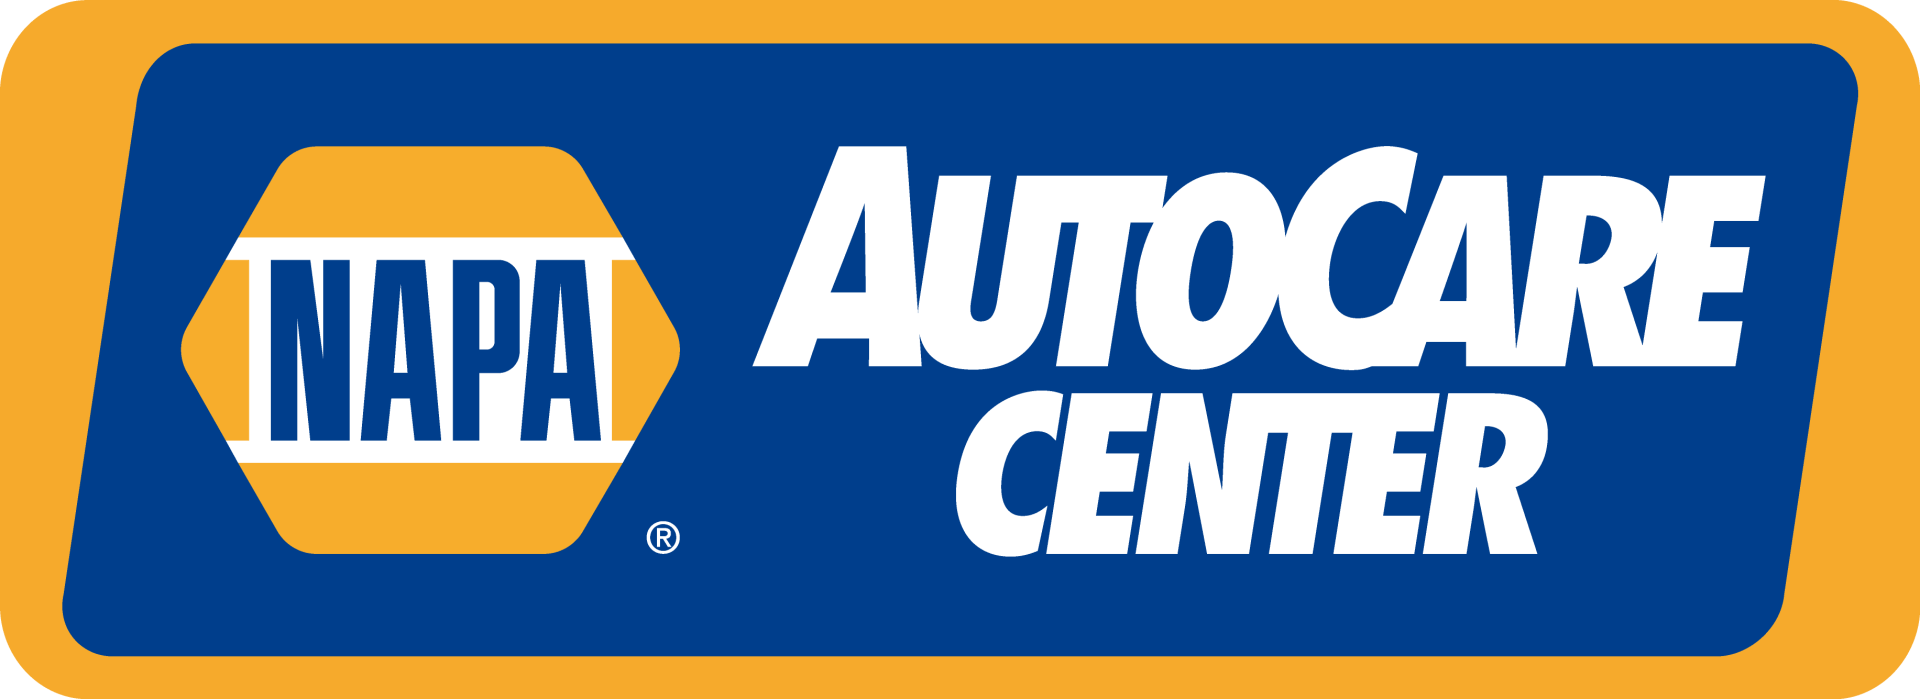 Napa Auto Care Center - Park Auto Repair Center